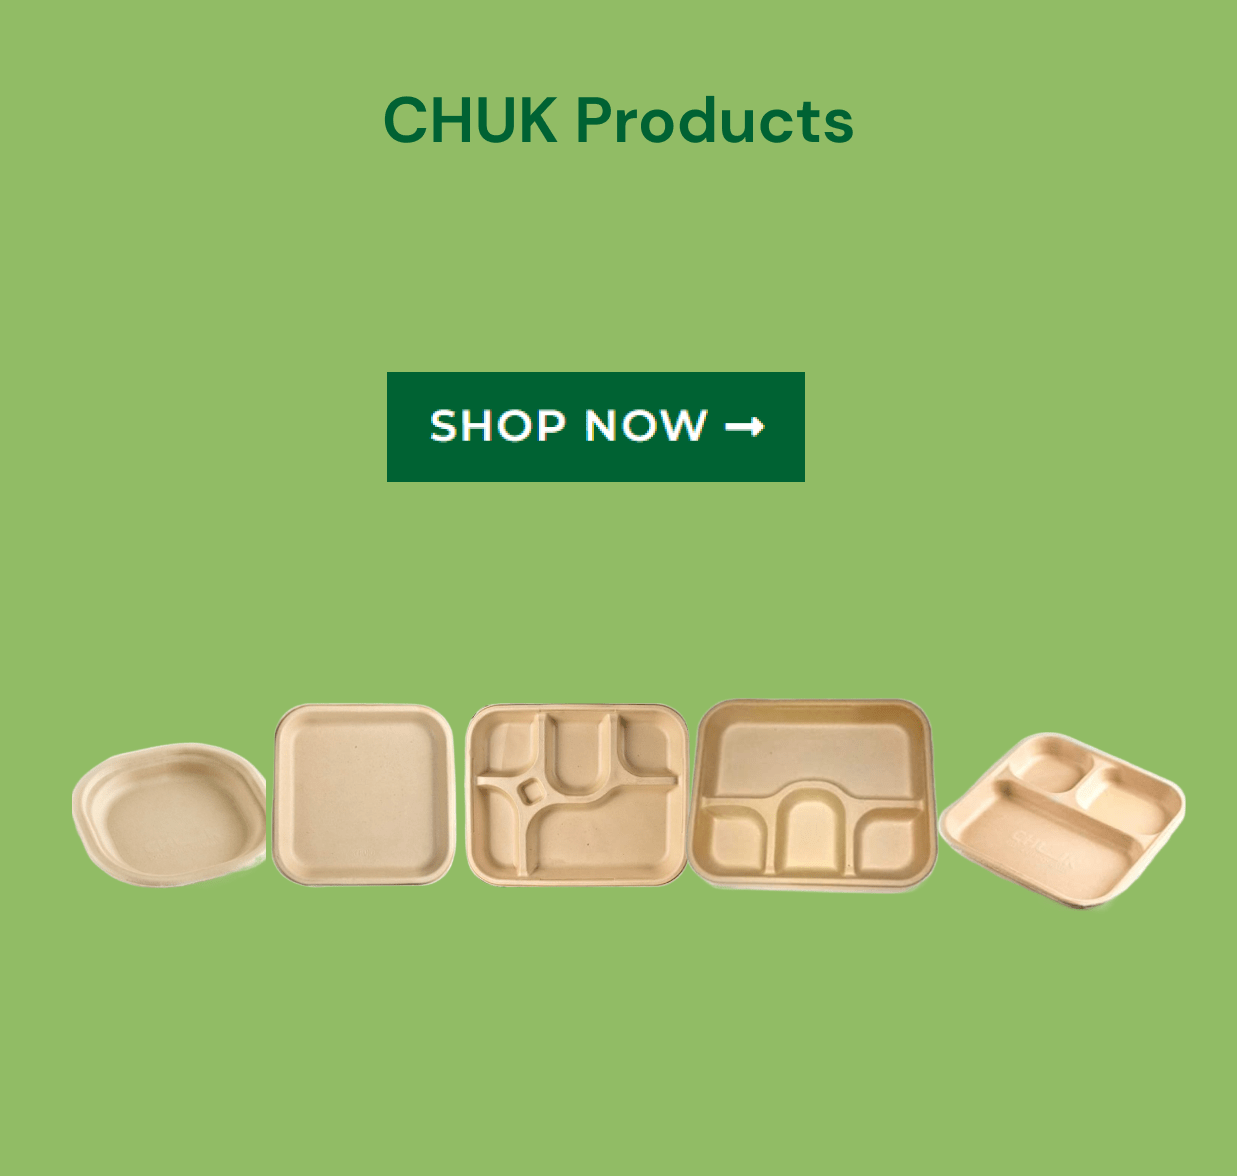 CHUK Products